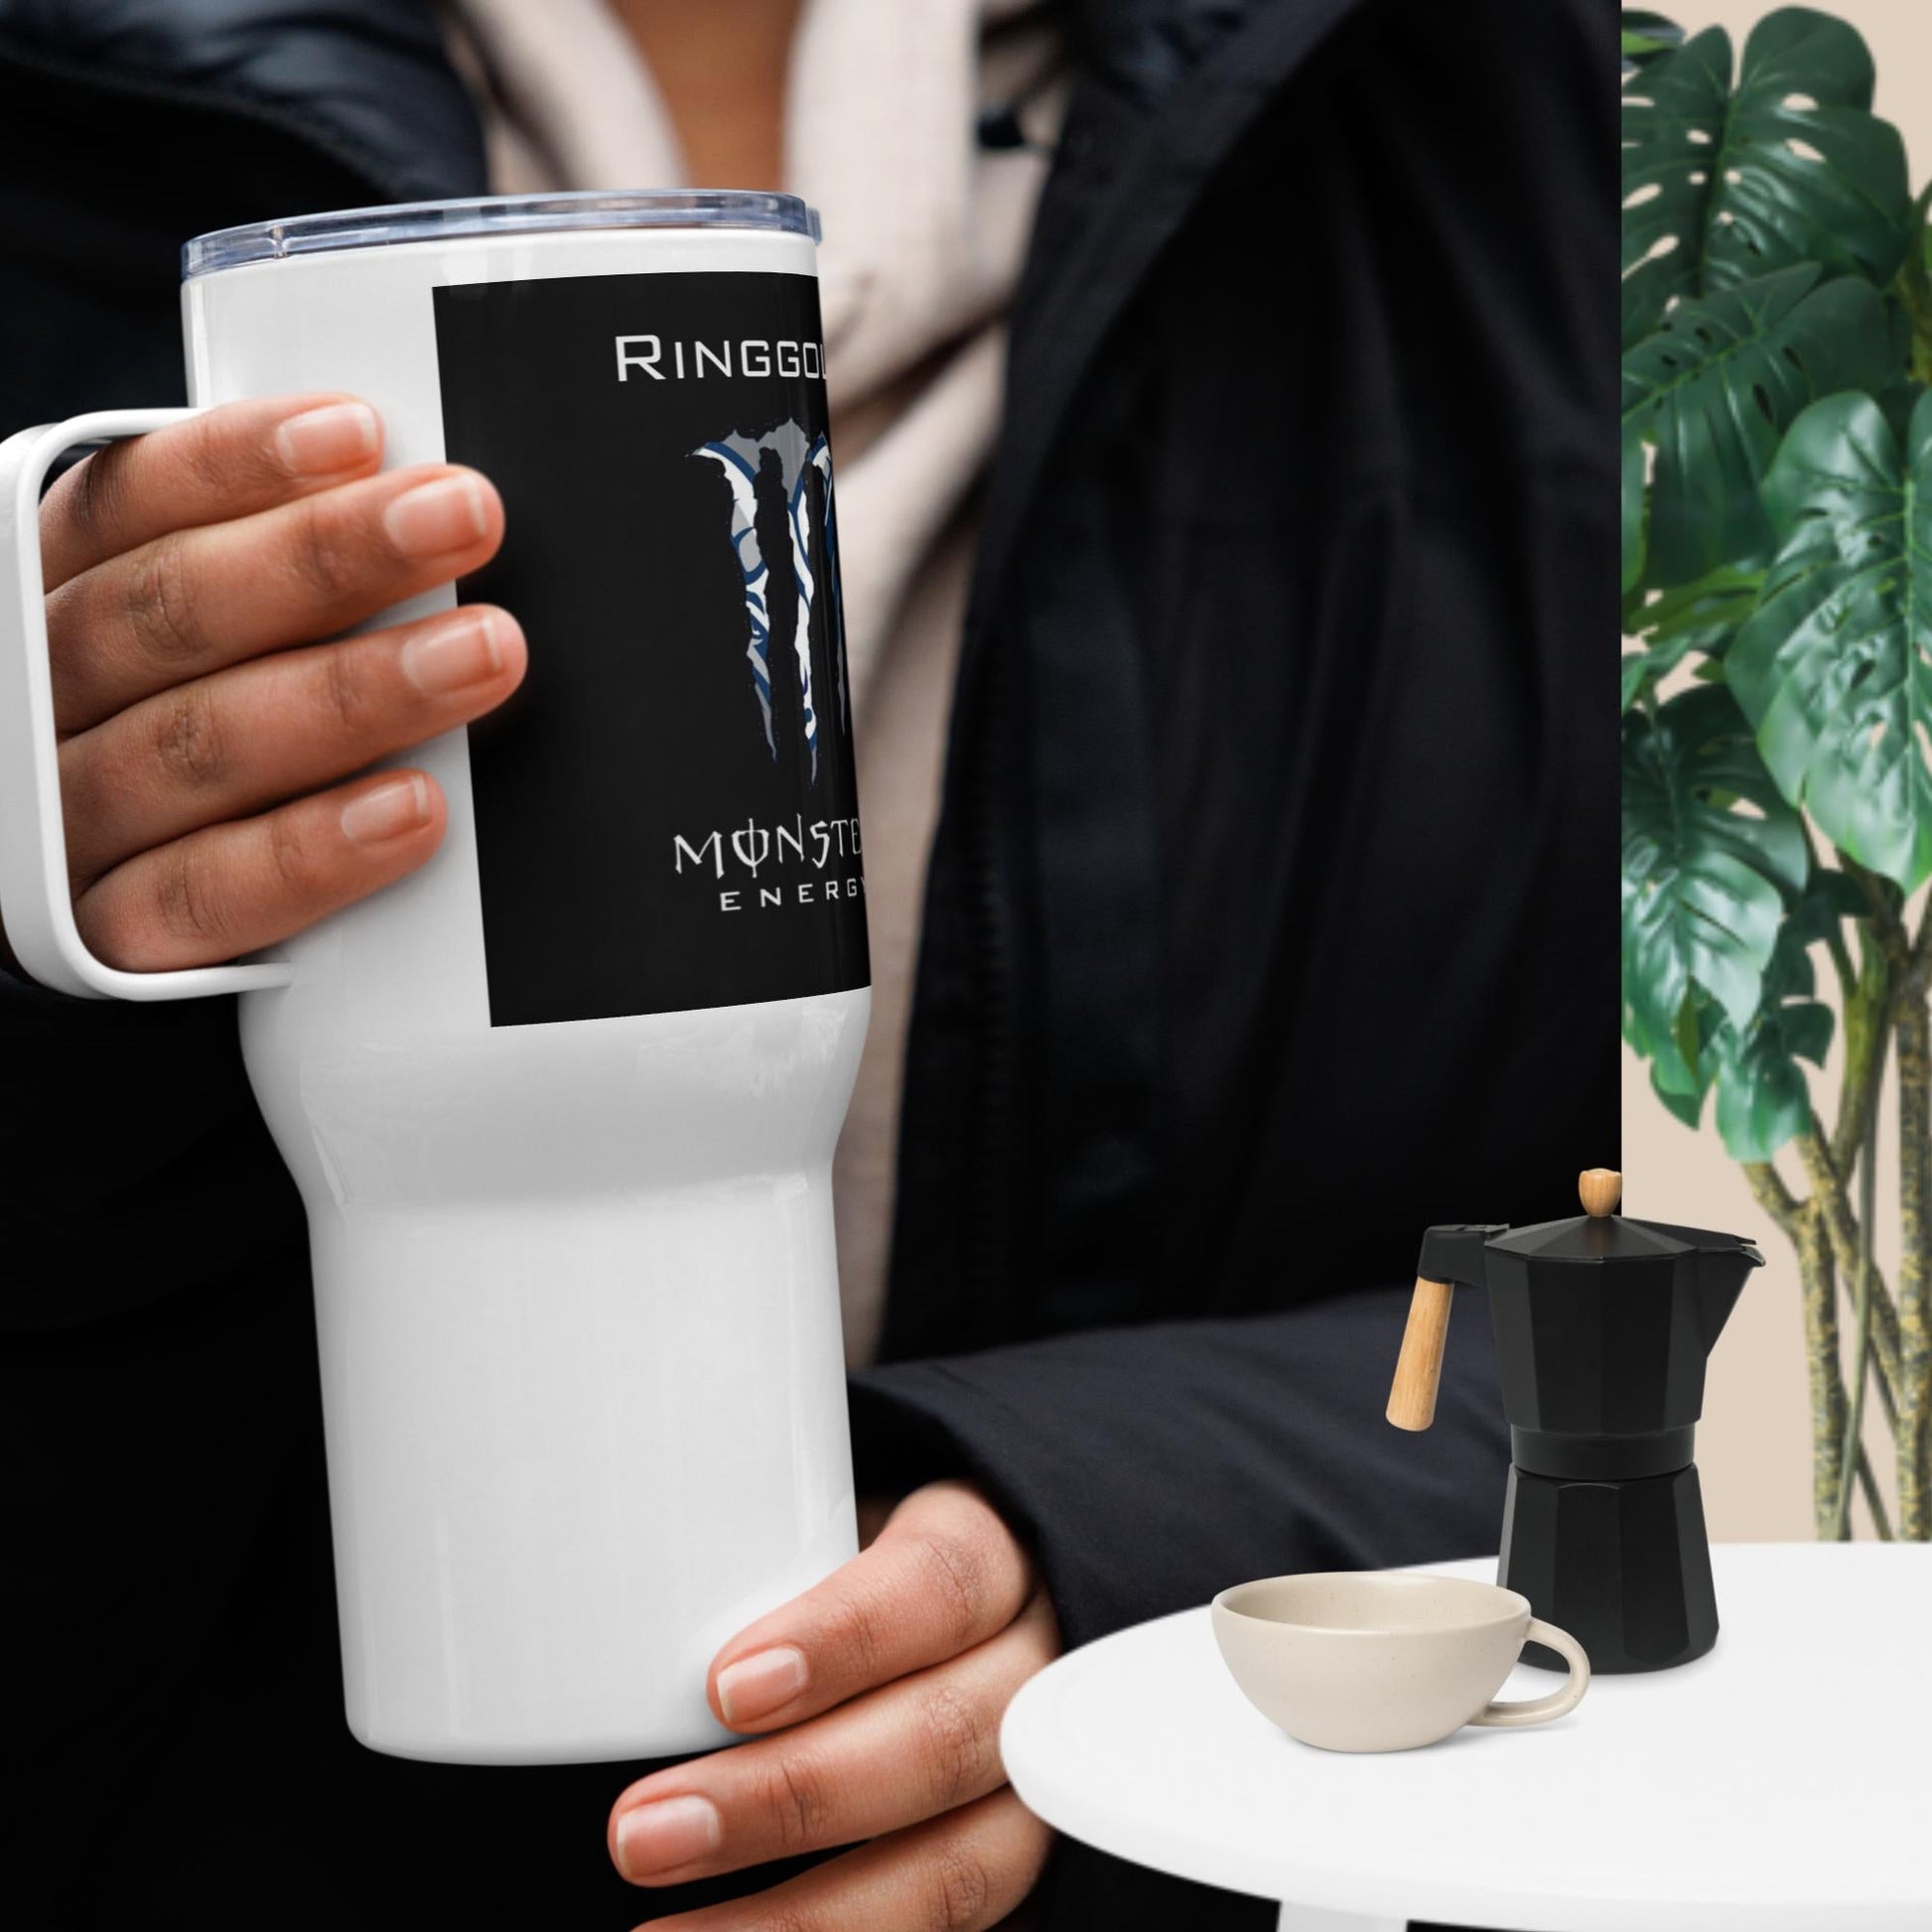 Ringgold Energy Travel mug with a handle - Legacy Creator Inc